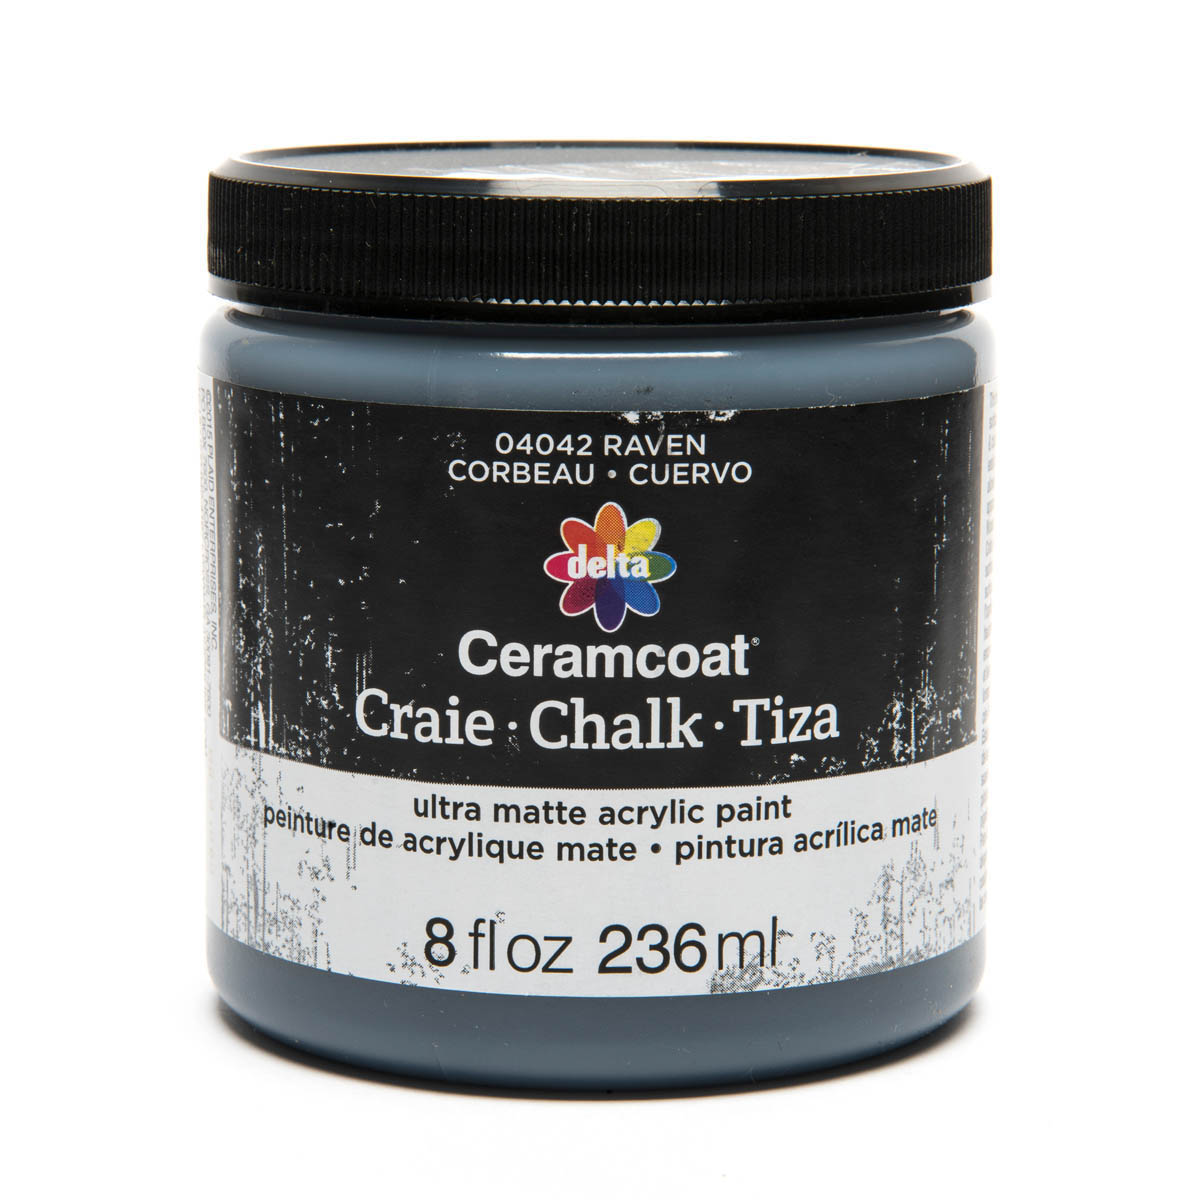 Delta Ceramcoat ® Chalk - Raven, 8 oz. - 04042